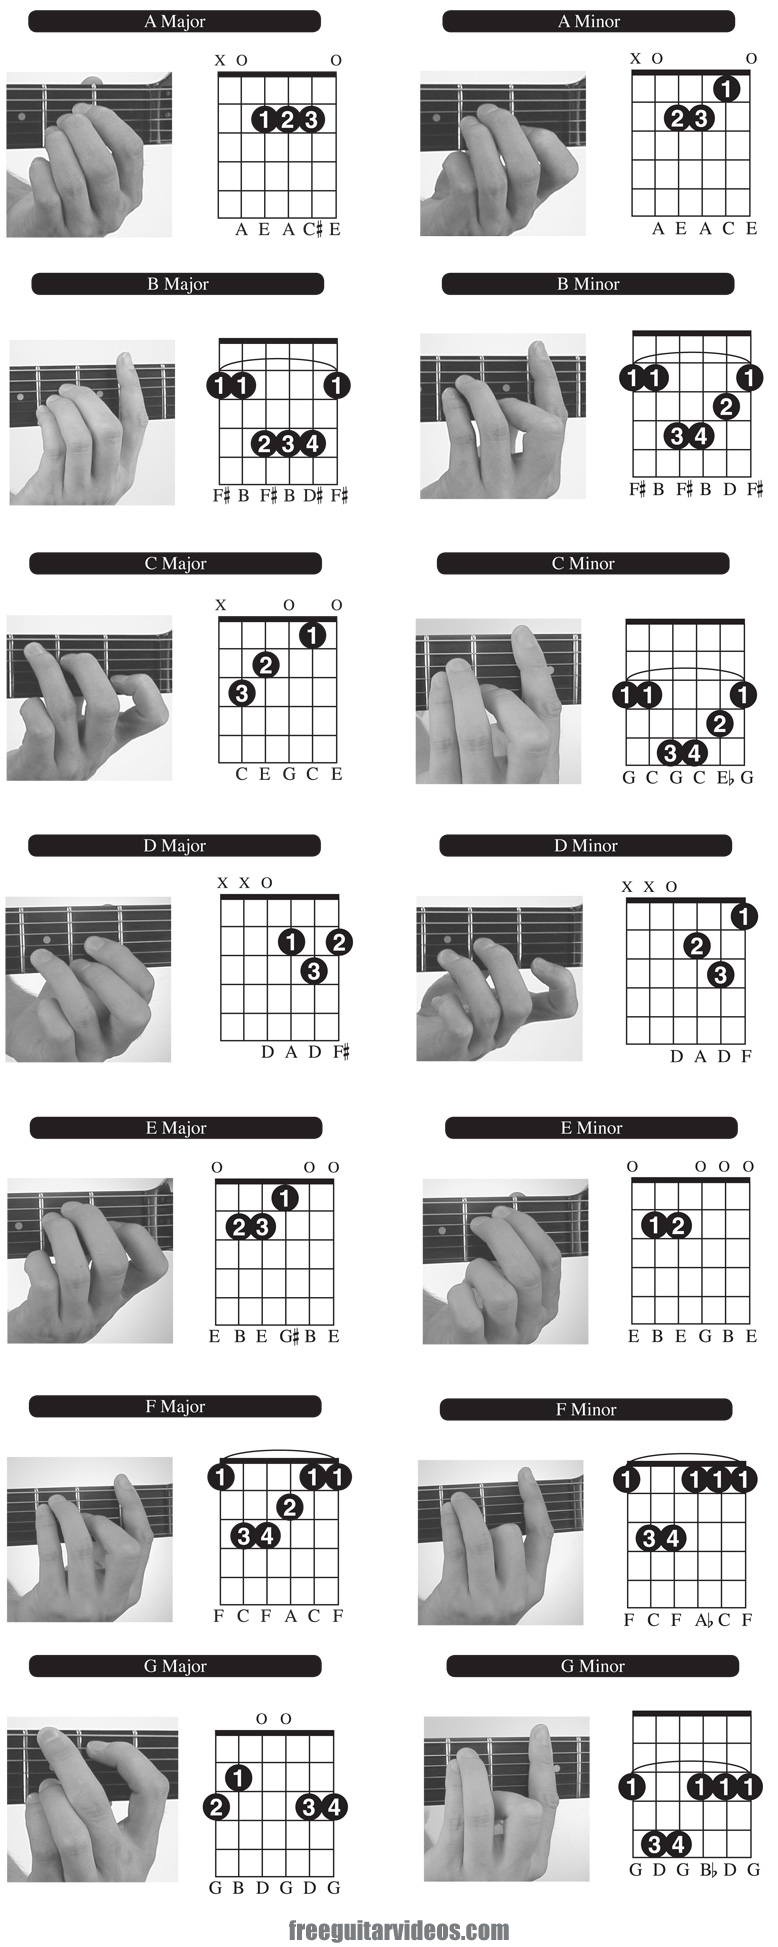 http://www.freeguitarvideos.com/Images/guitar-chords-chart.jpg